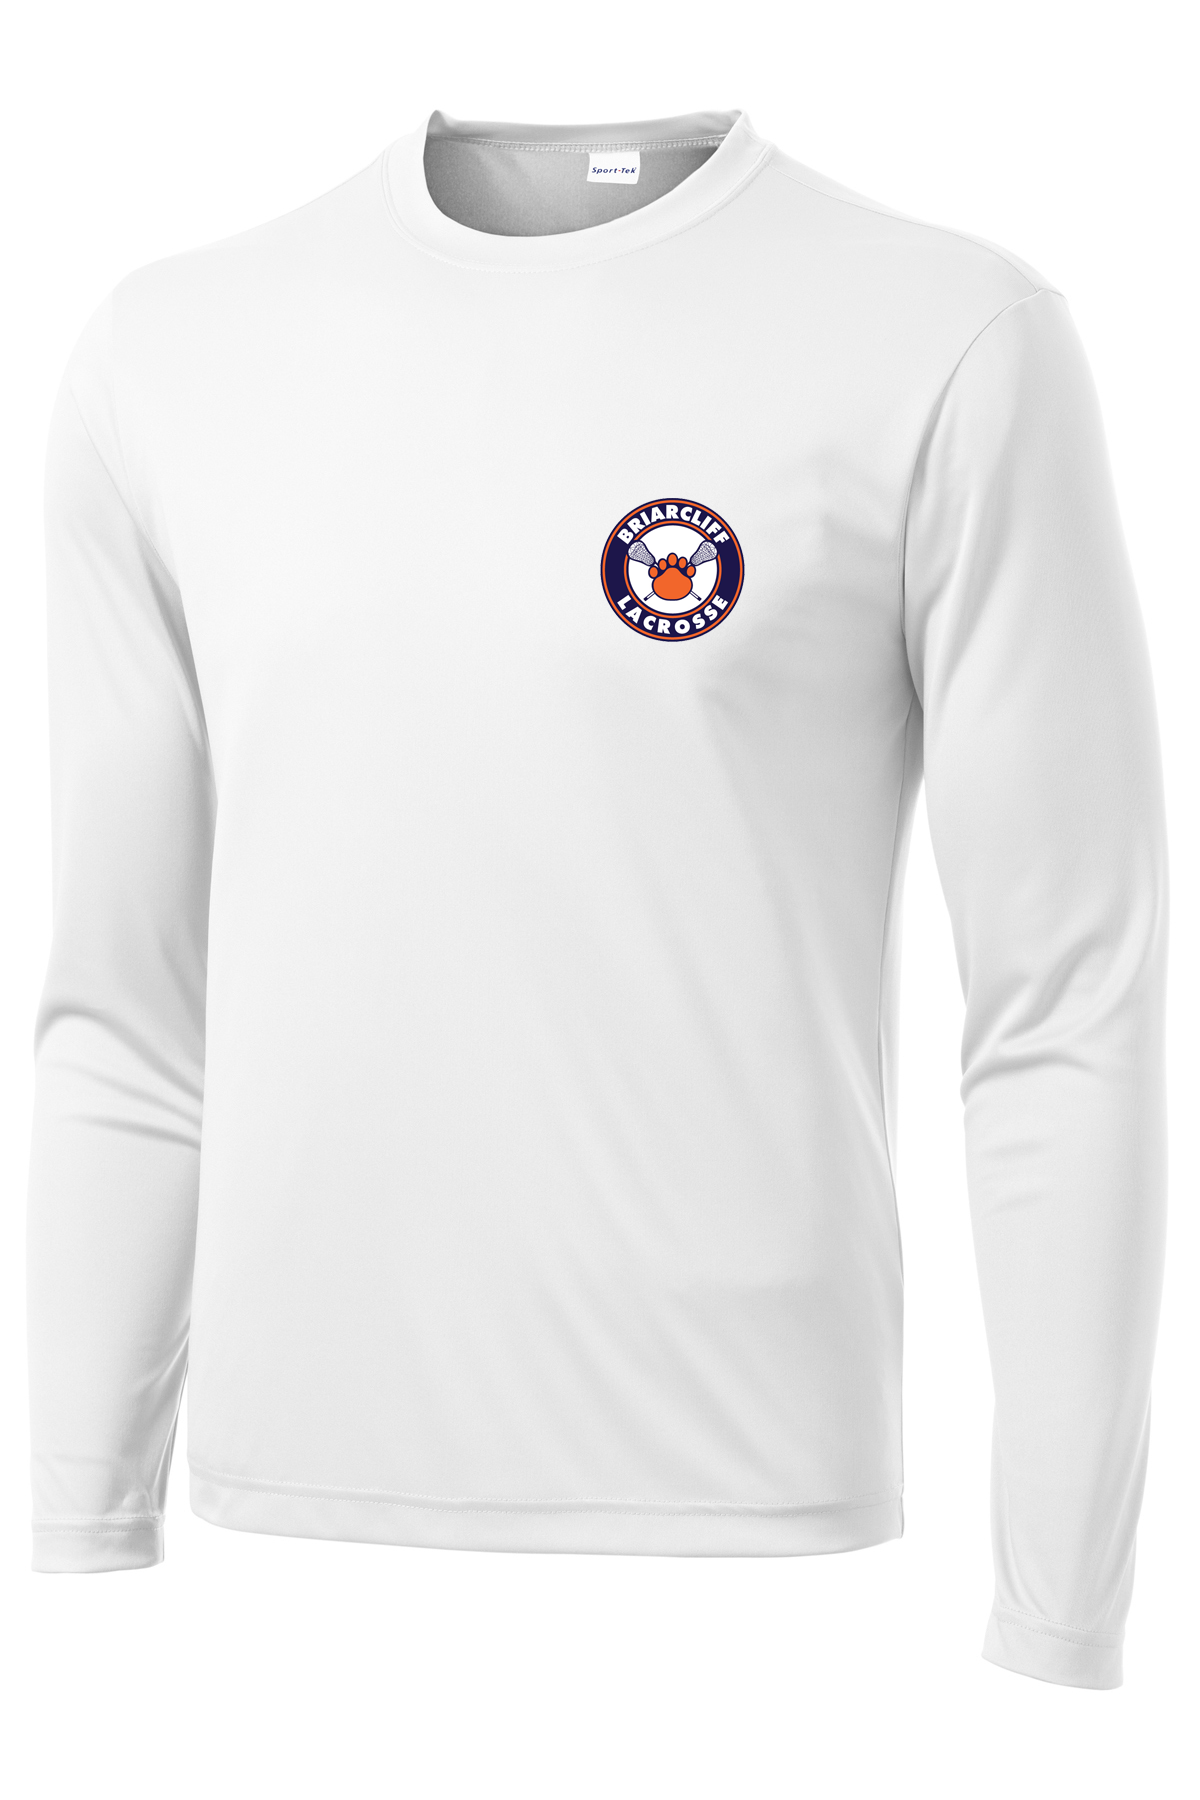 Briarcliff Lacrosse White Long Sleeve Performance Shirt